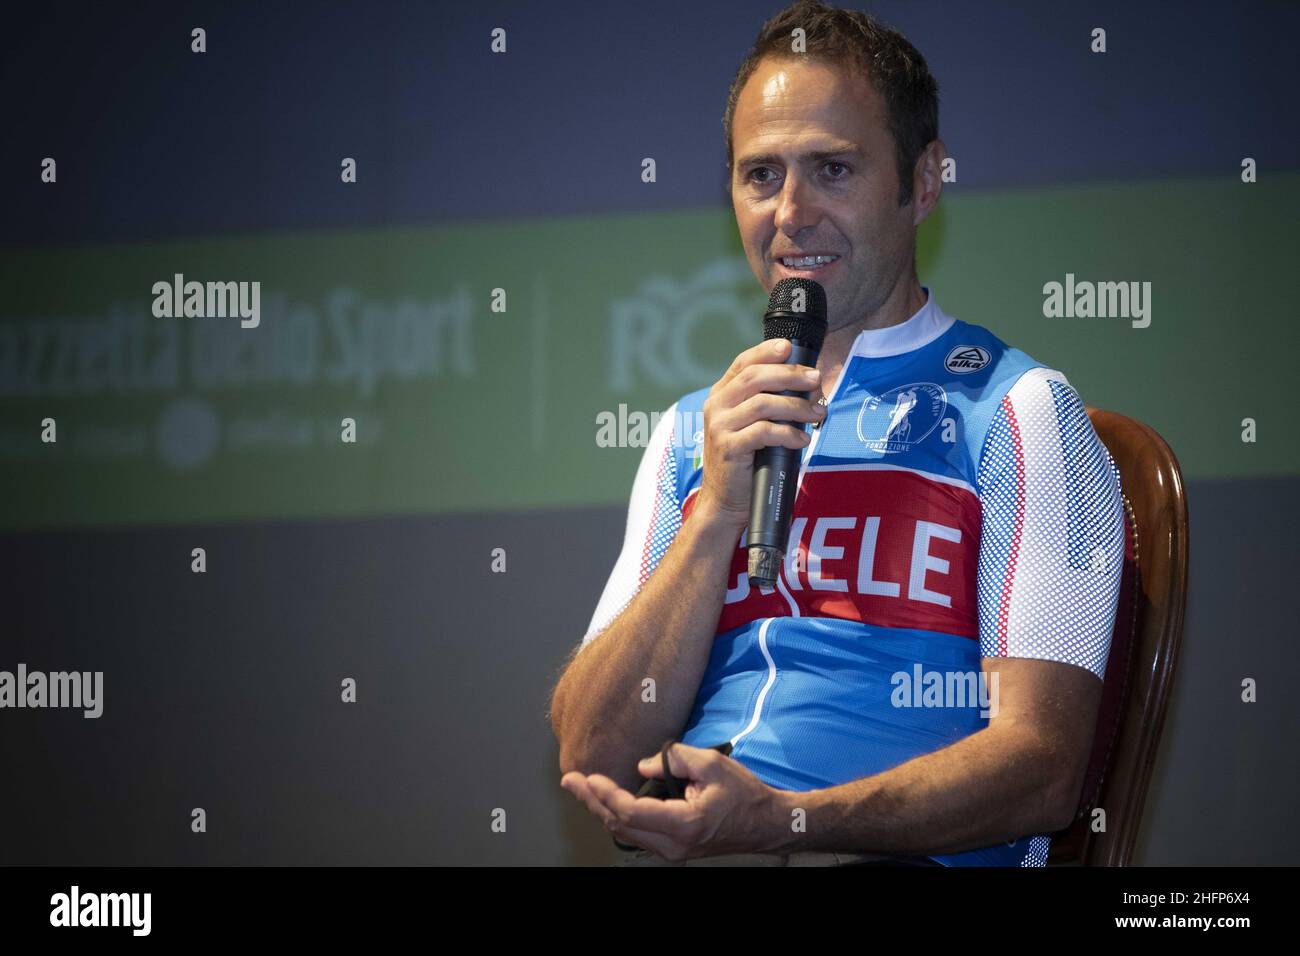 Lapresse/Andrea Alfano 3 octobre 2020 Caltanissetta (Italie) Sport Cycling Giro d'Italia 2020 &#x2013; Giro E - début de la conférence sur le pic: Gilberto Simoni Banque D'Images